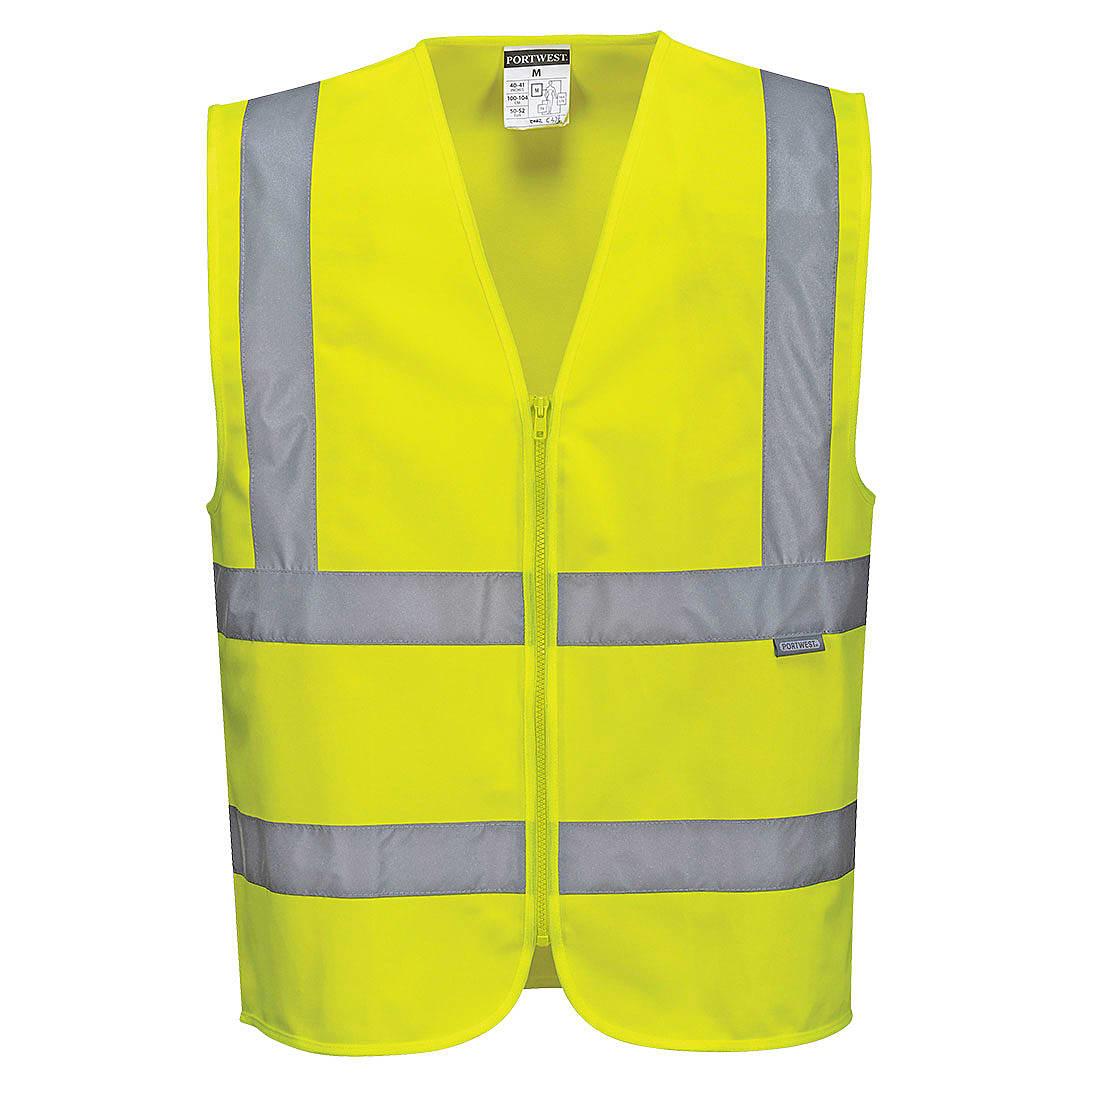 Portwest Hi-Viz Zipped Band & Brace Vest in Yellow (Product Code: C375)